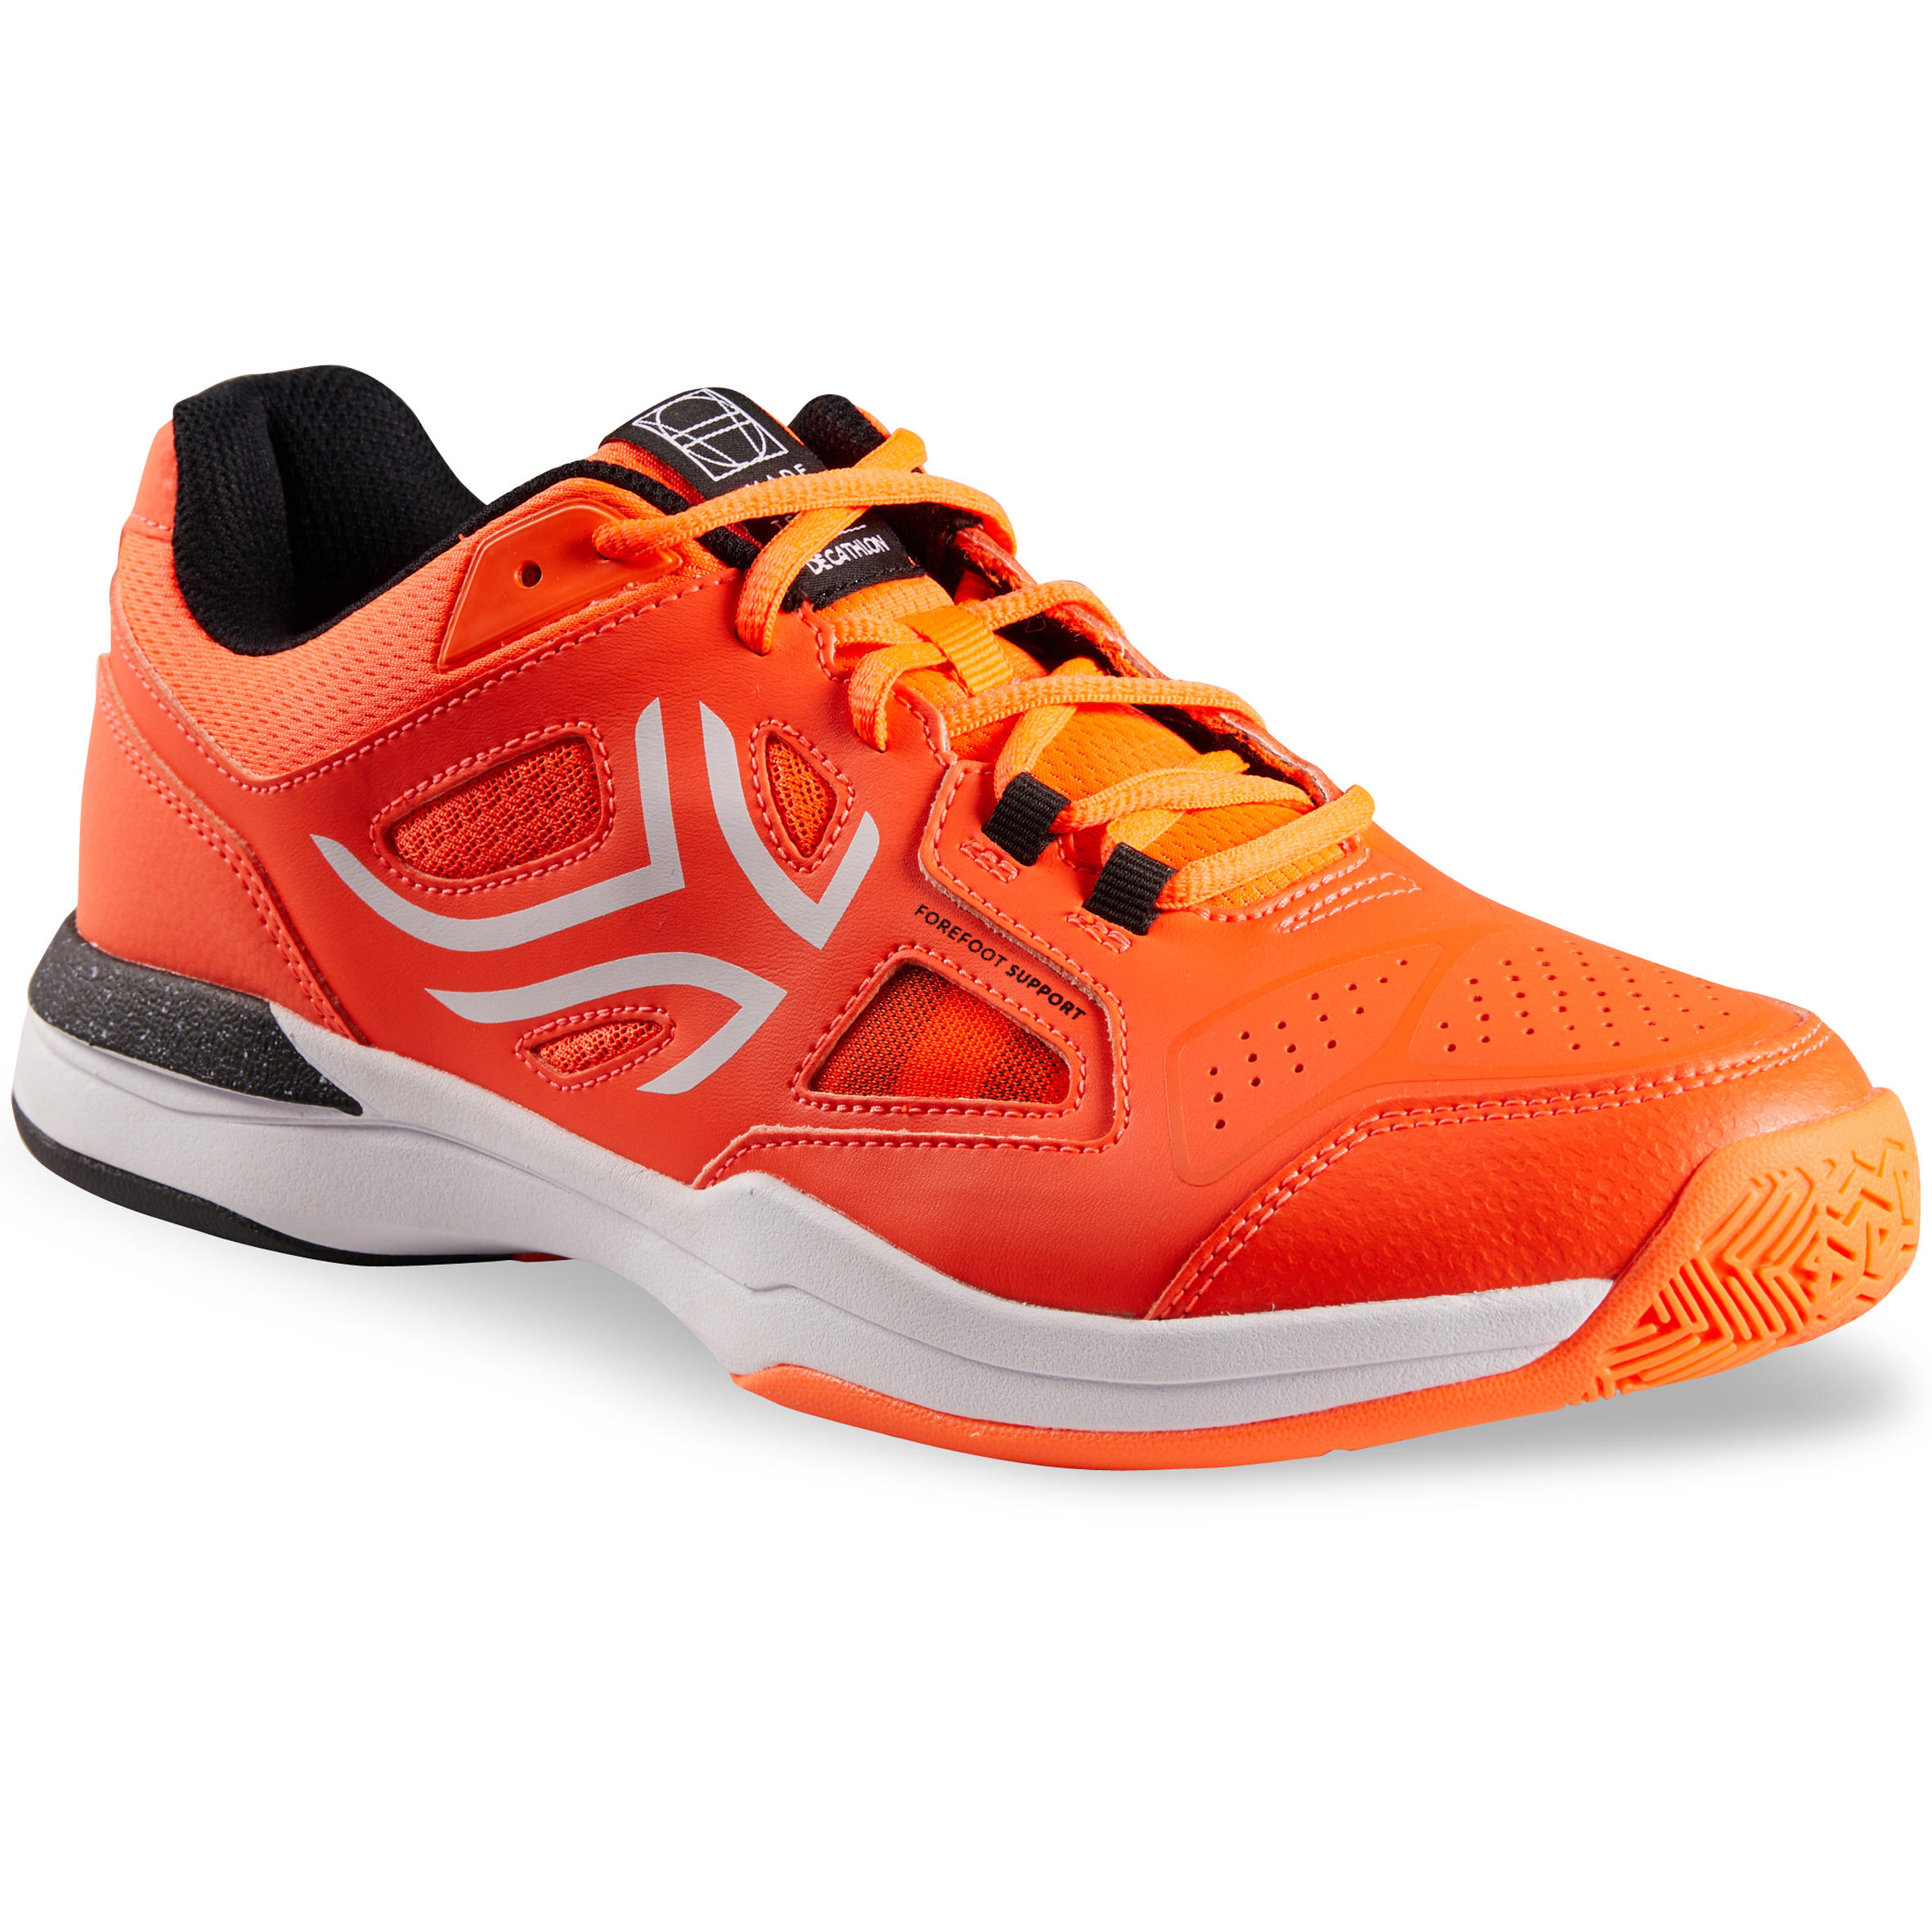 ARTENGO TS500 Multi-Court Tennis Shoes - Orange